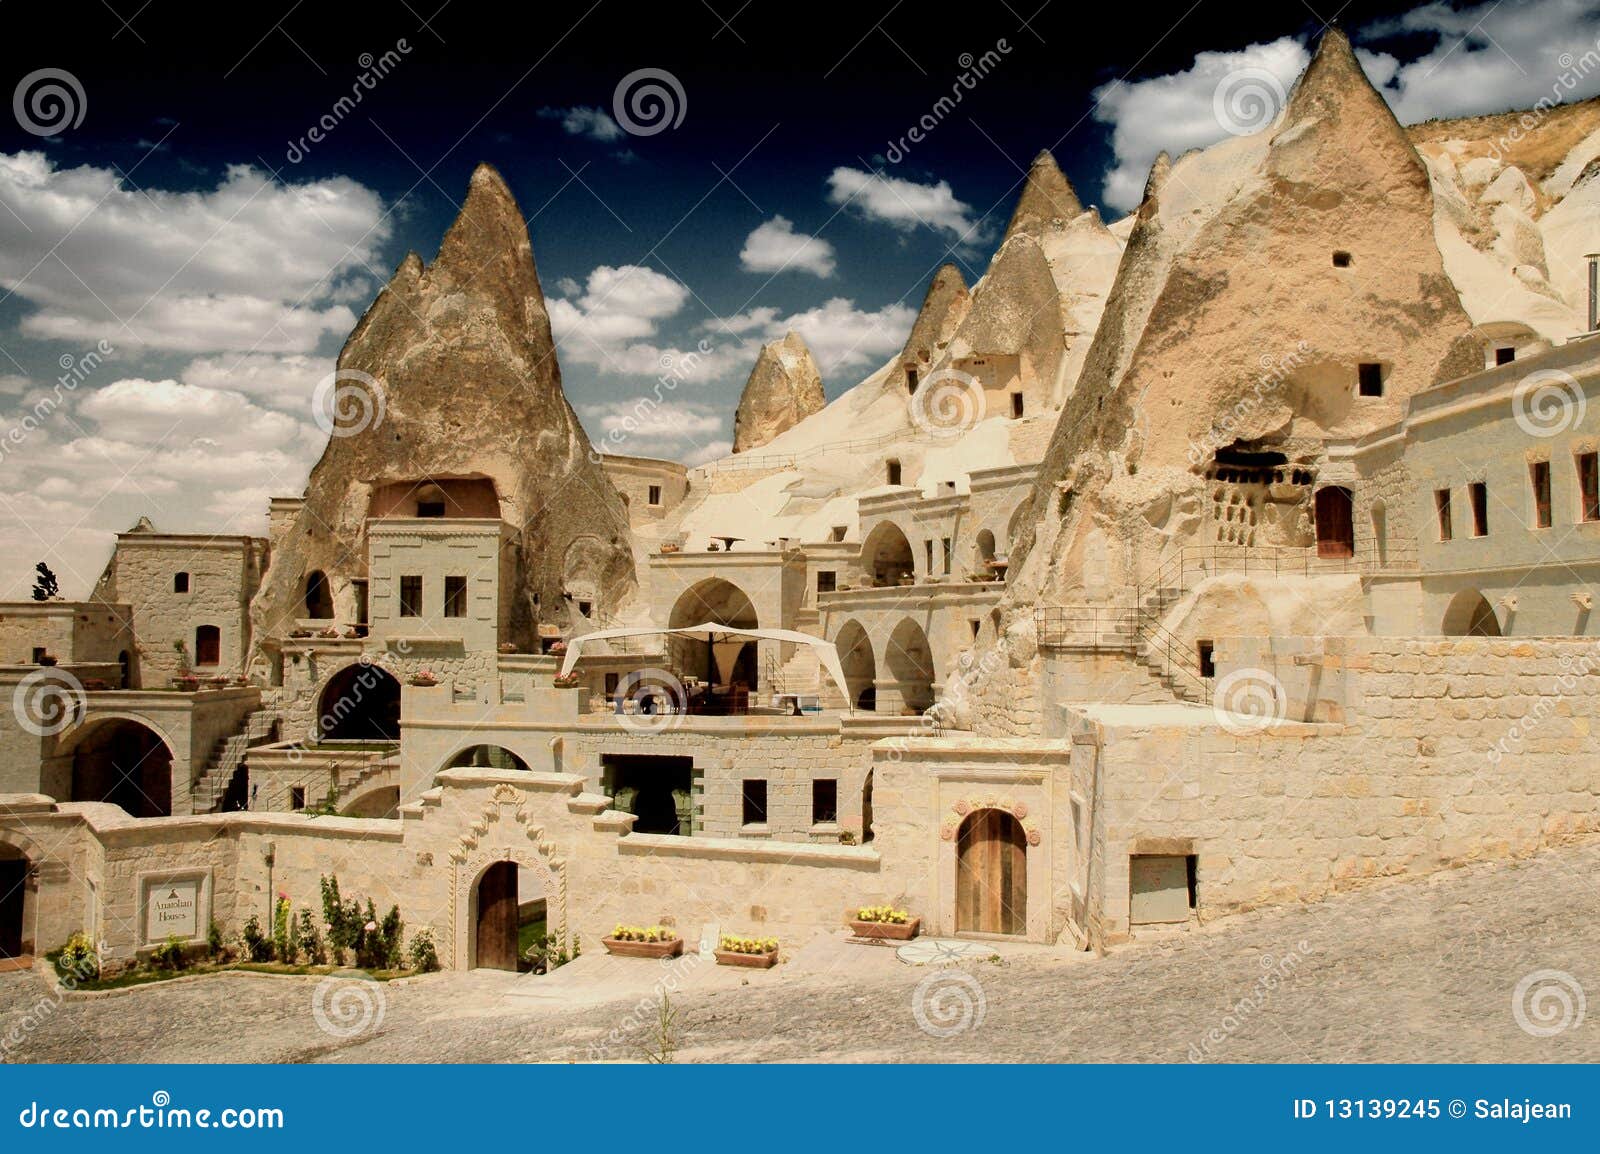 cave dwellings in goreme, cappadocia, turkey